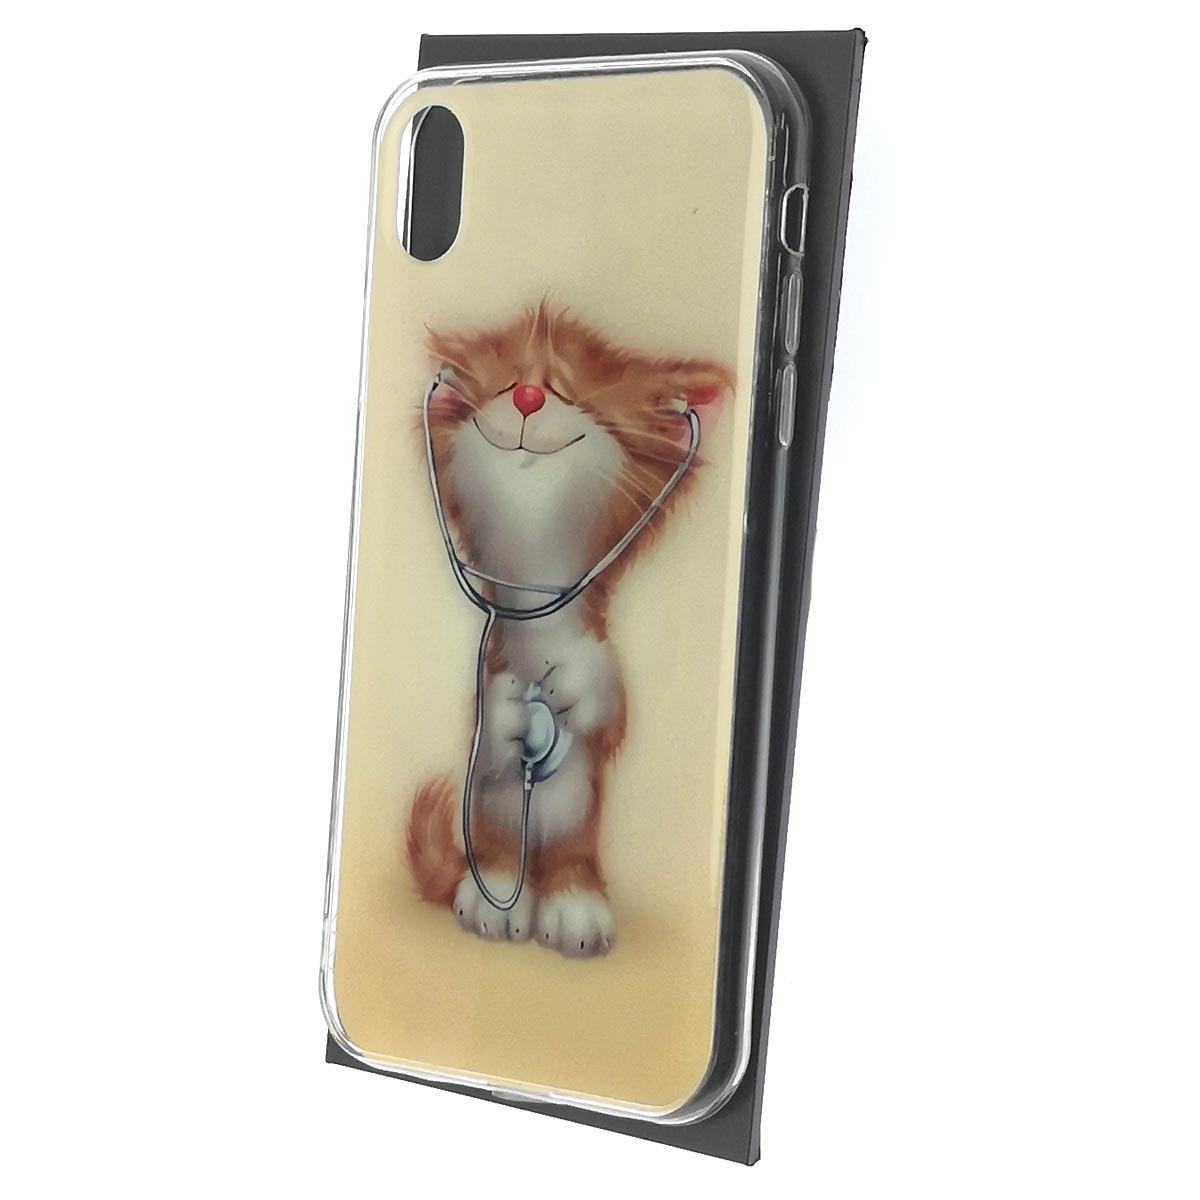 Чехол накладка для APPLE iPhone XR, силикон, рисунок Кот с стетоскопом